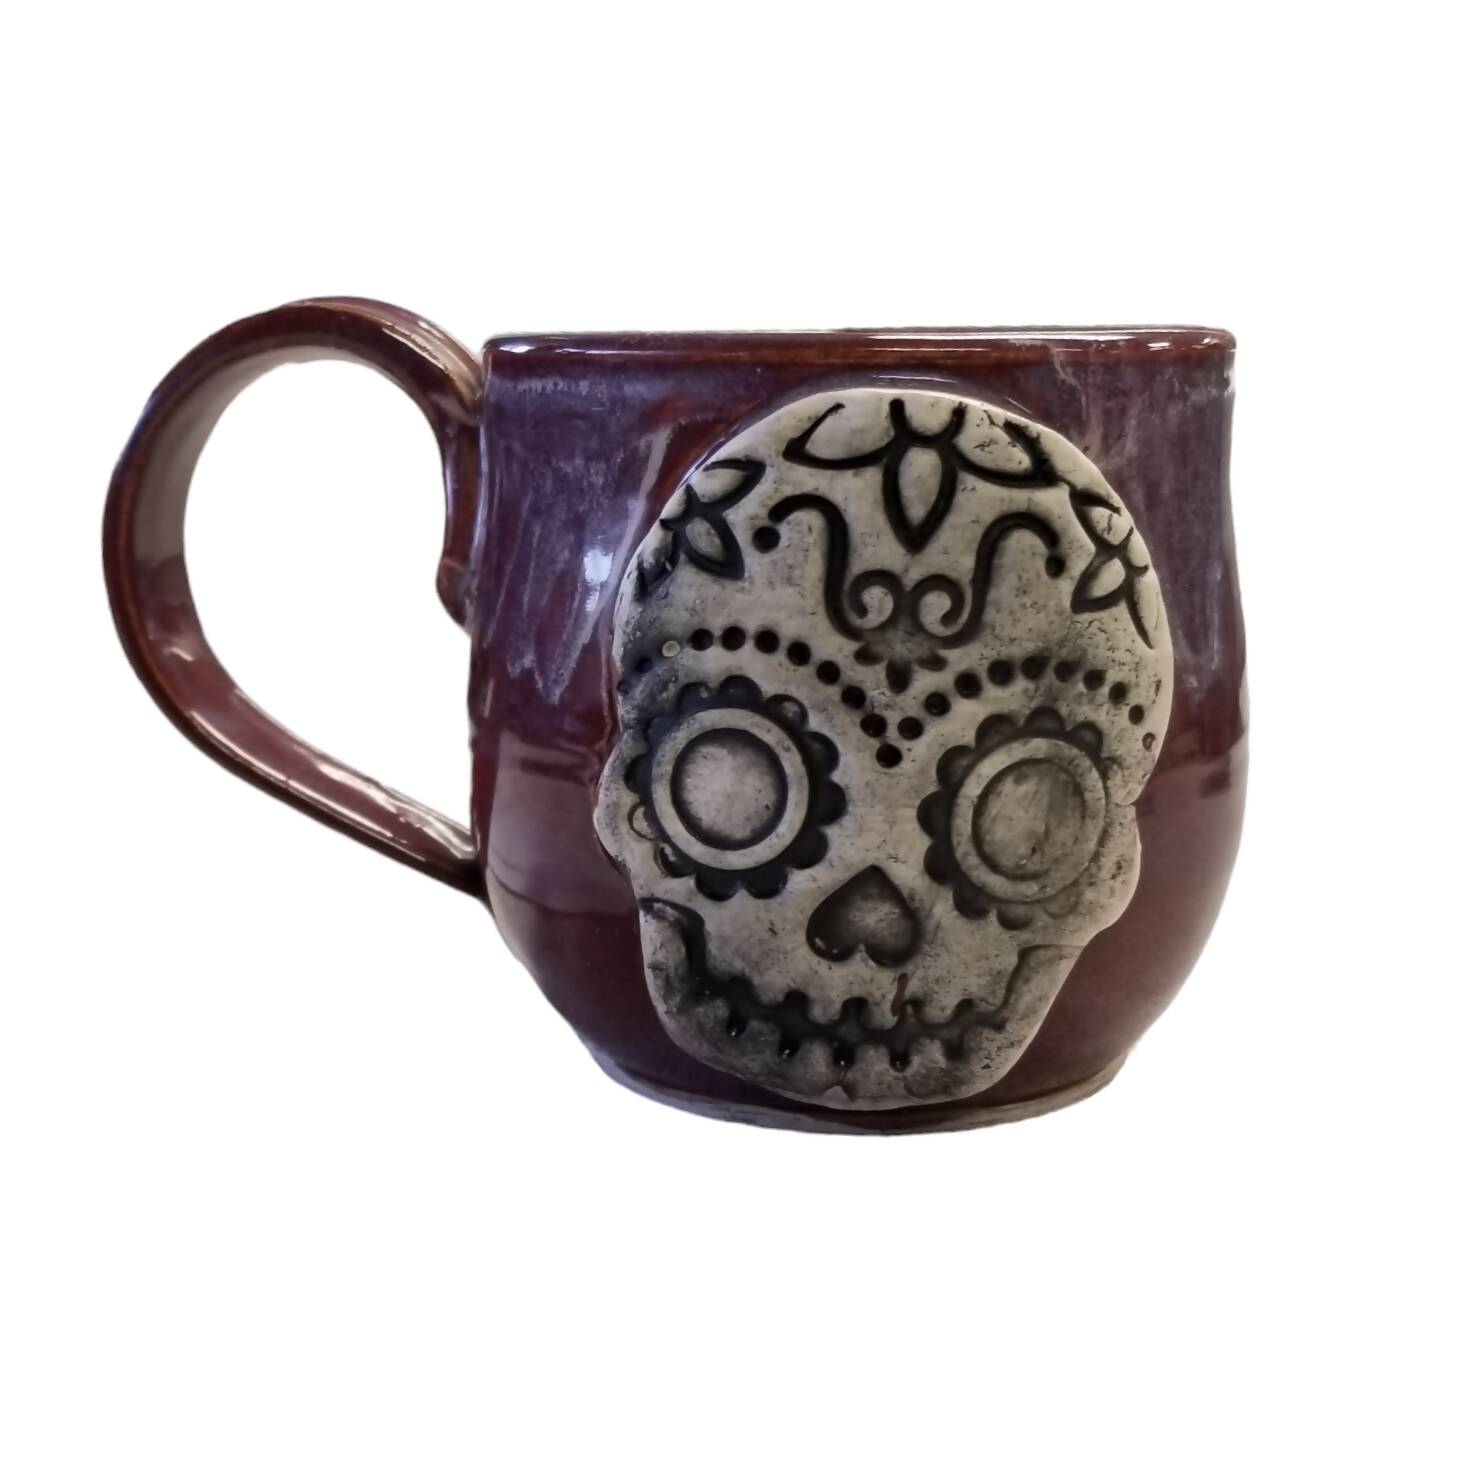 Sugar skull mug